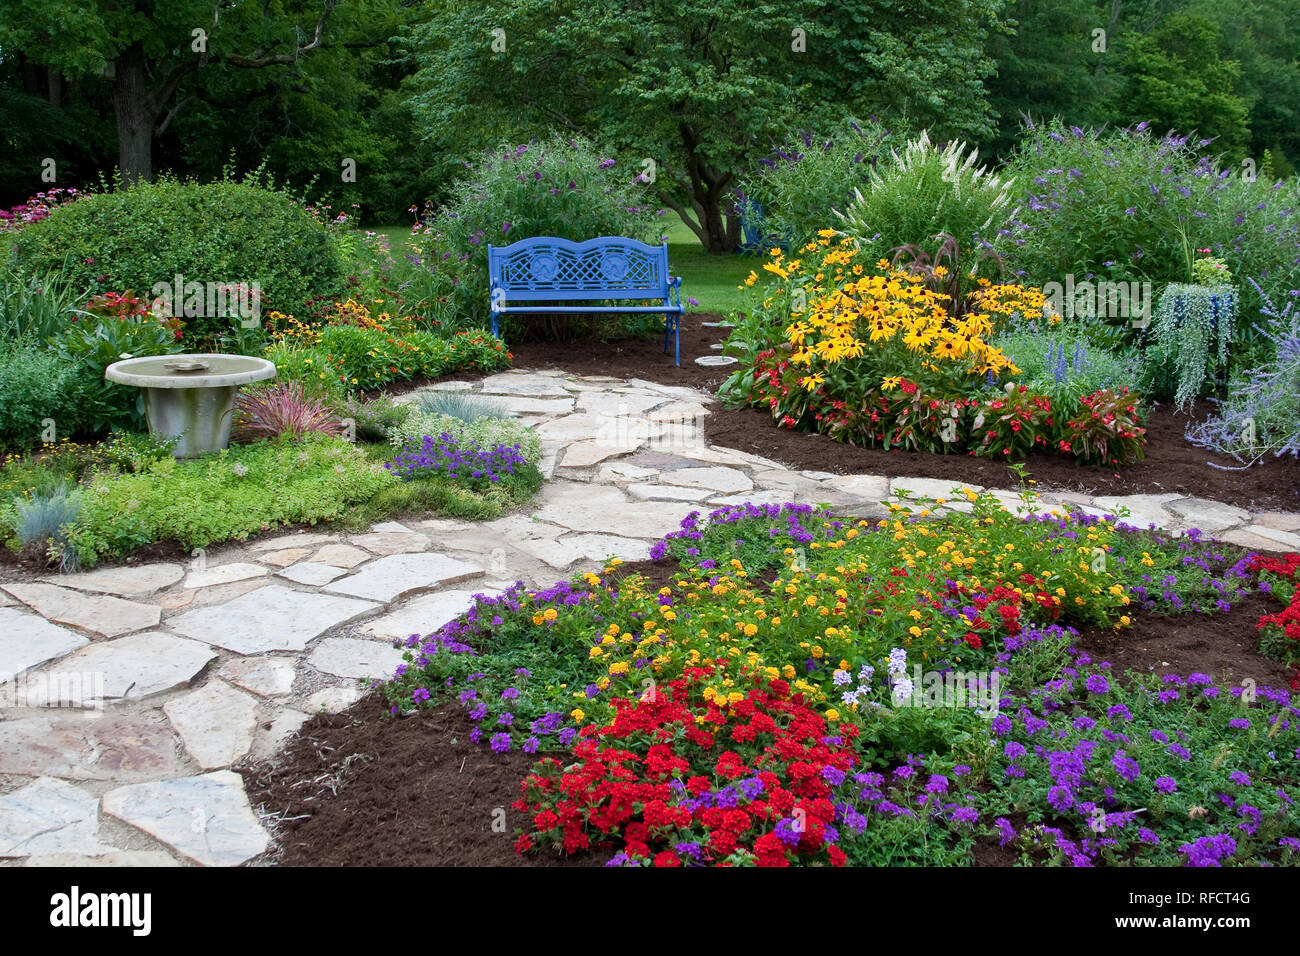 63821-21617 Blue bench, bird bath and stone path in flower garden.  Black-eyed Susans (Rudbeckia hirta)  Red Dragon Wing Begonias (Begonia x hybrida)  Stock Photo